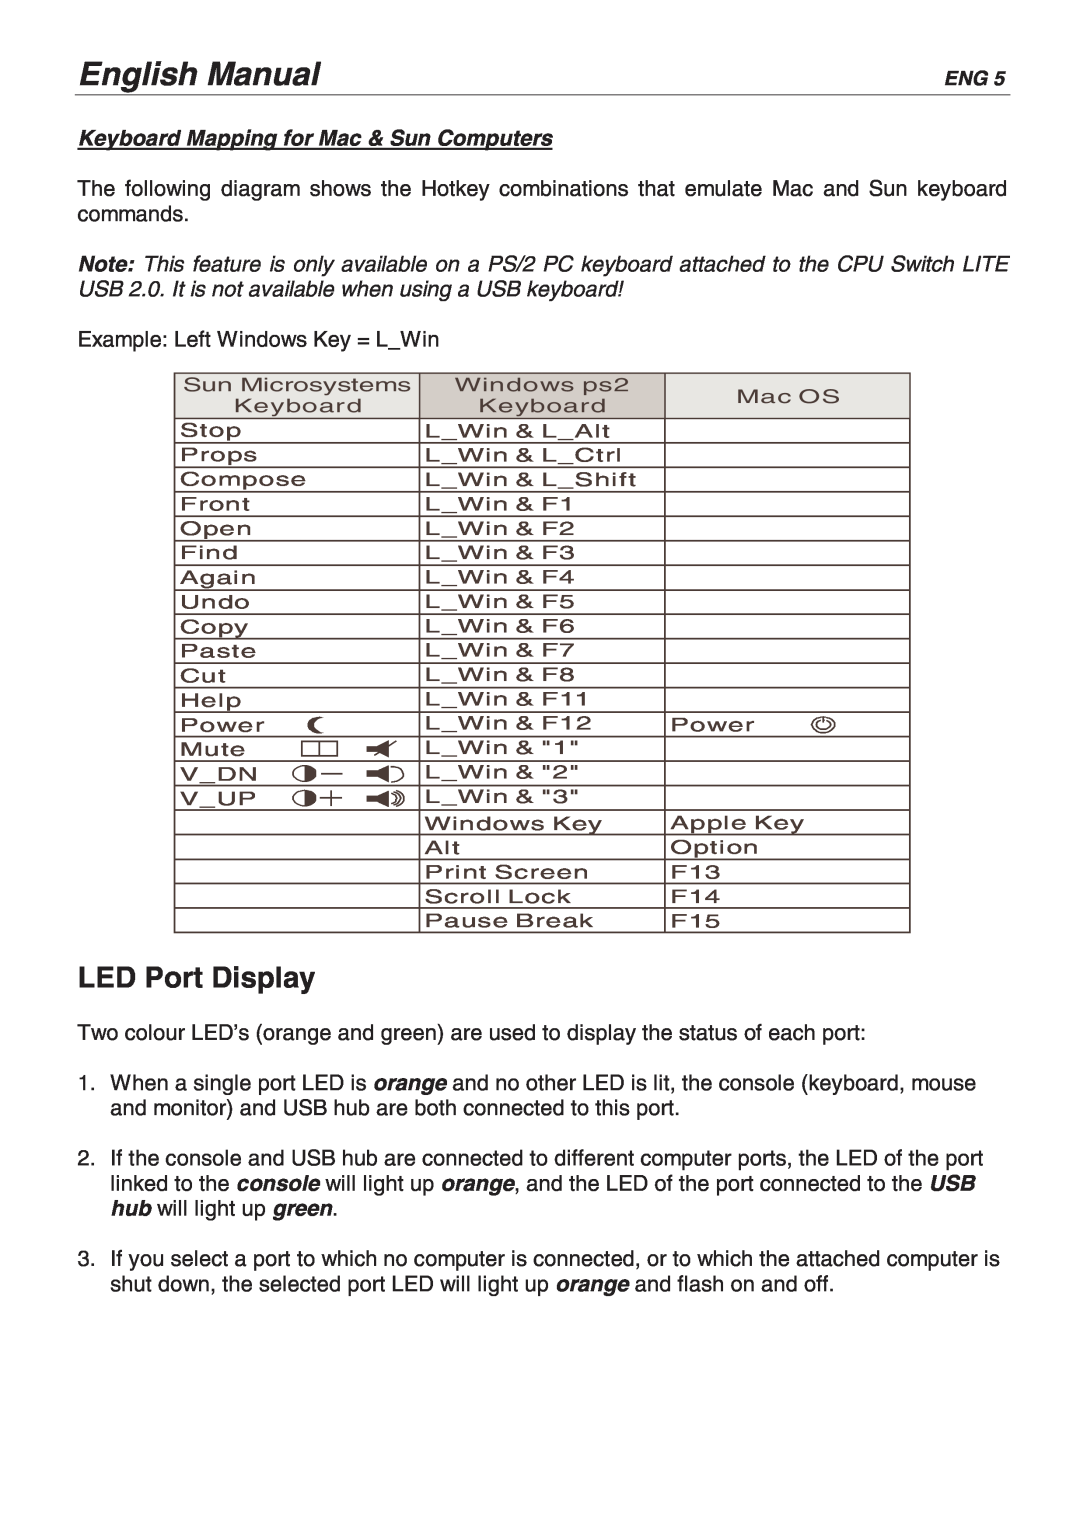 Lindy 32825, 32856 user manual English Manual, LED Port Display, Keyboard Mapping for Mac & Sun Computers 